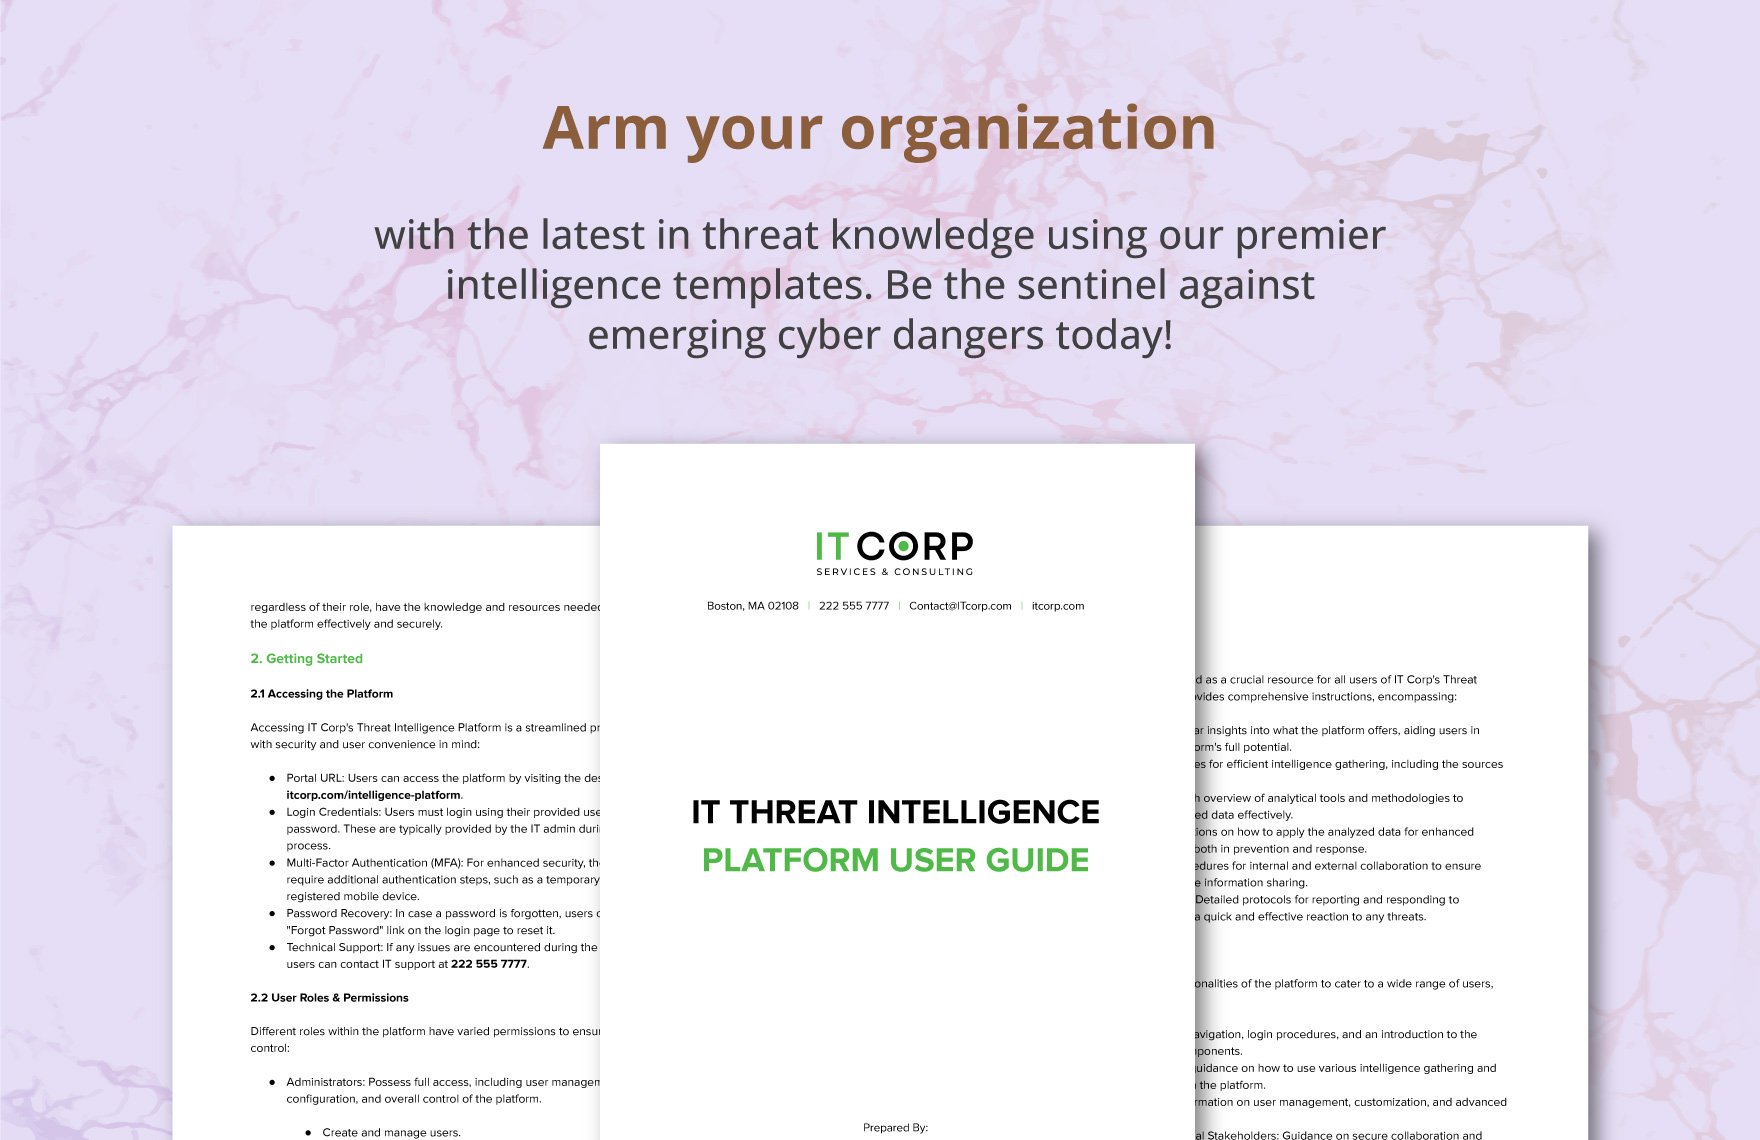 IT Threat Intelligence Platform User Guide Template